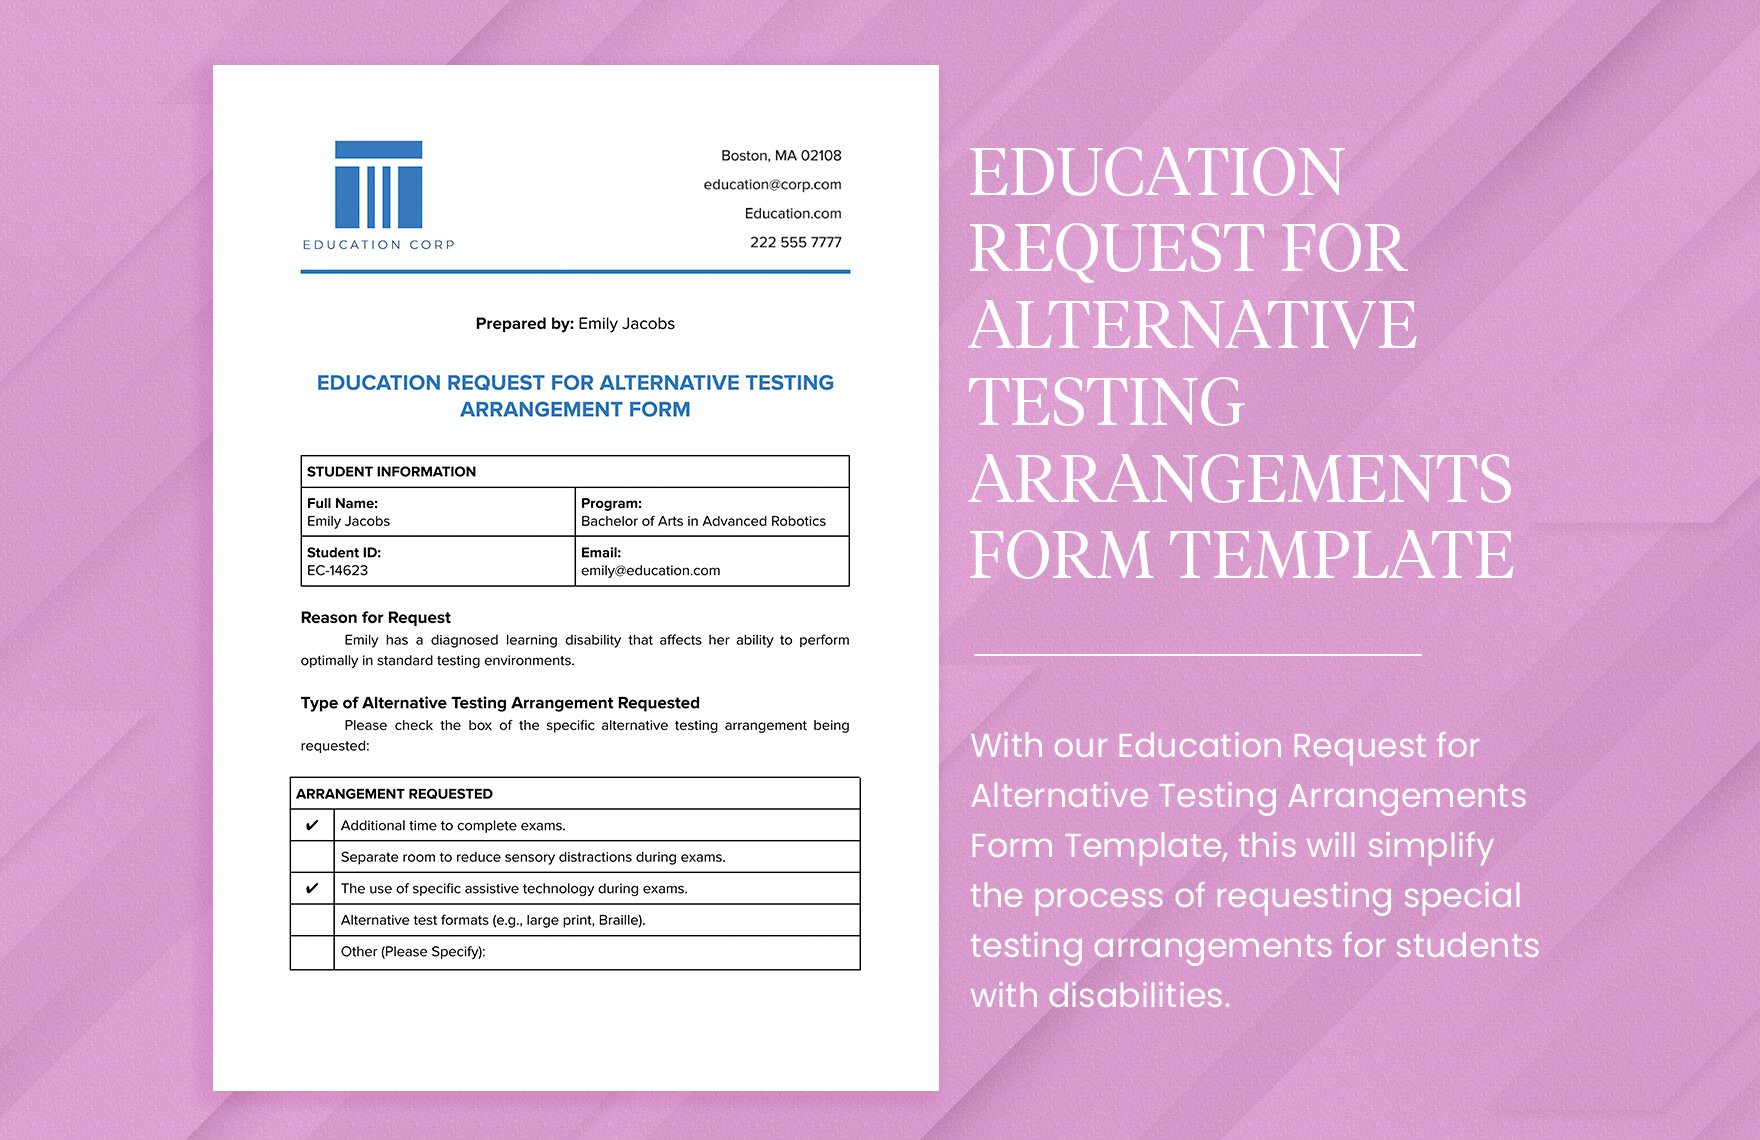 Education Request for Alternative Testing Arrangements Form Template